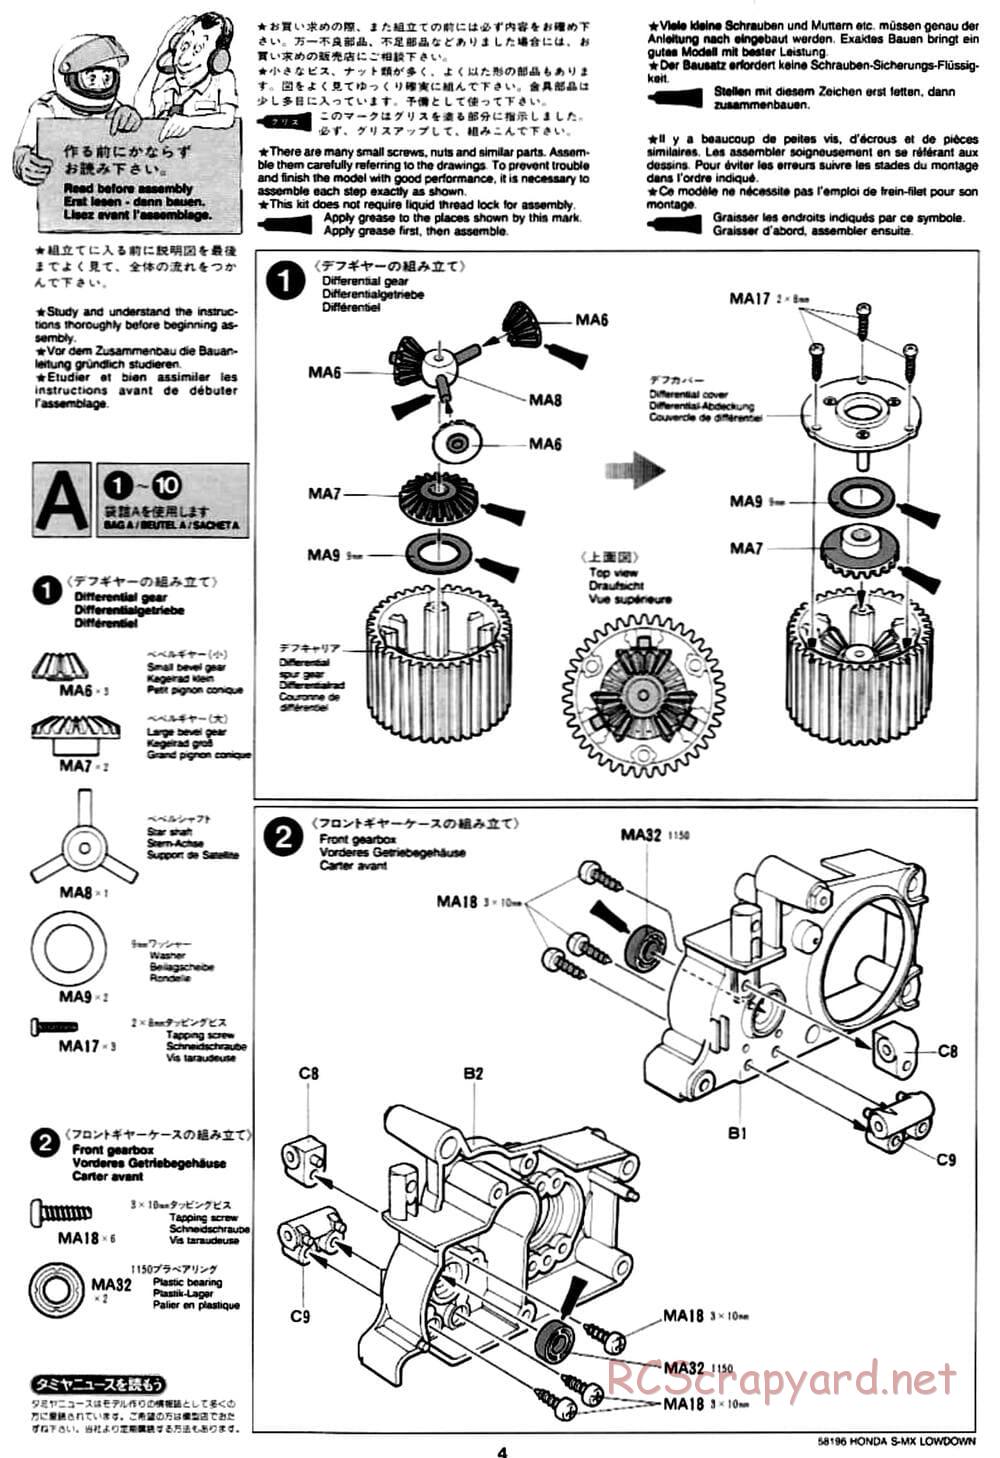 Tamiya - Honda S-MX Lowdown - M01 Chassis - Manual - Page 4